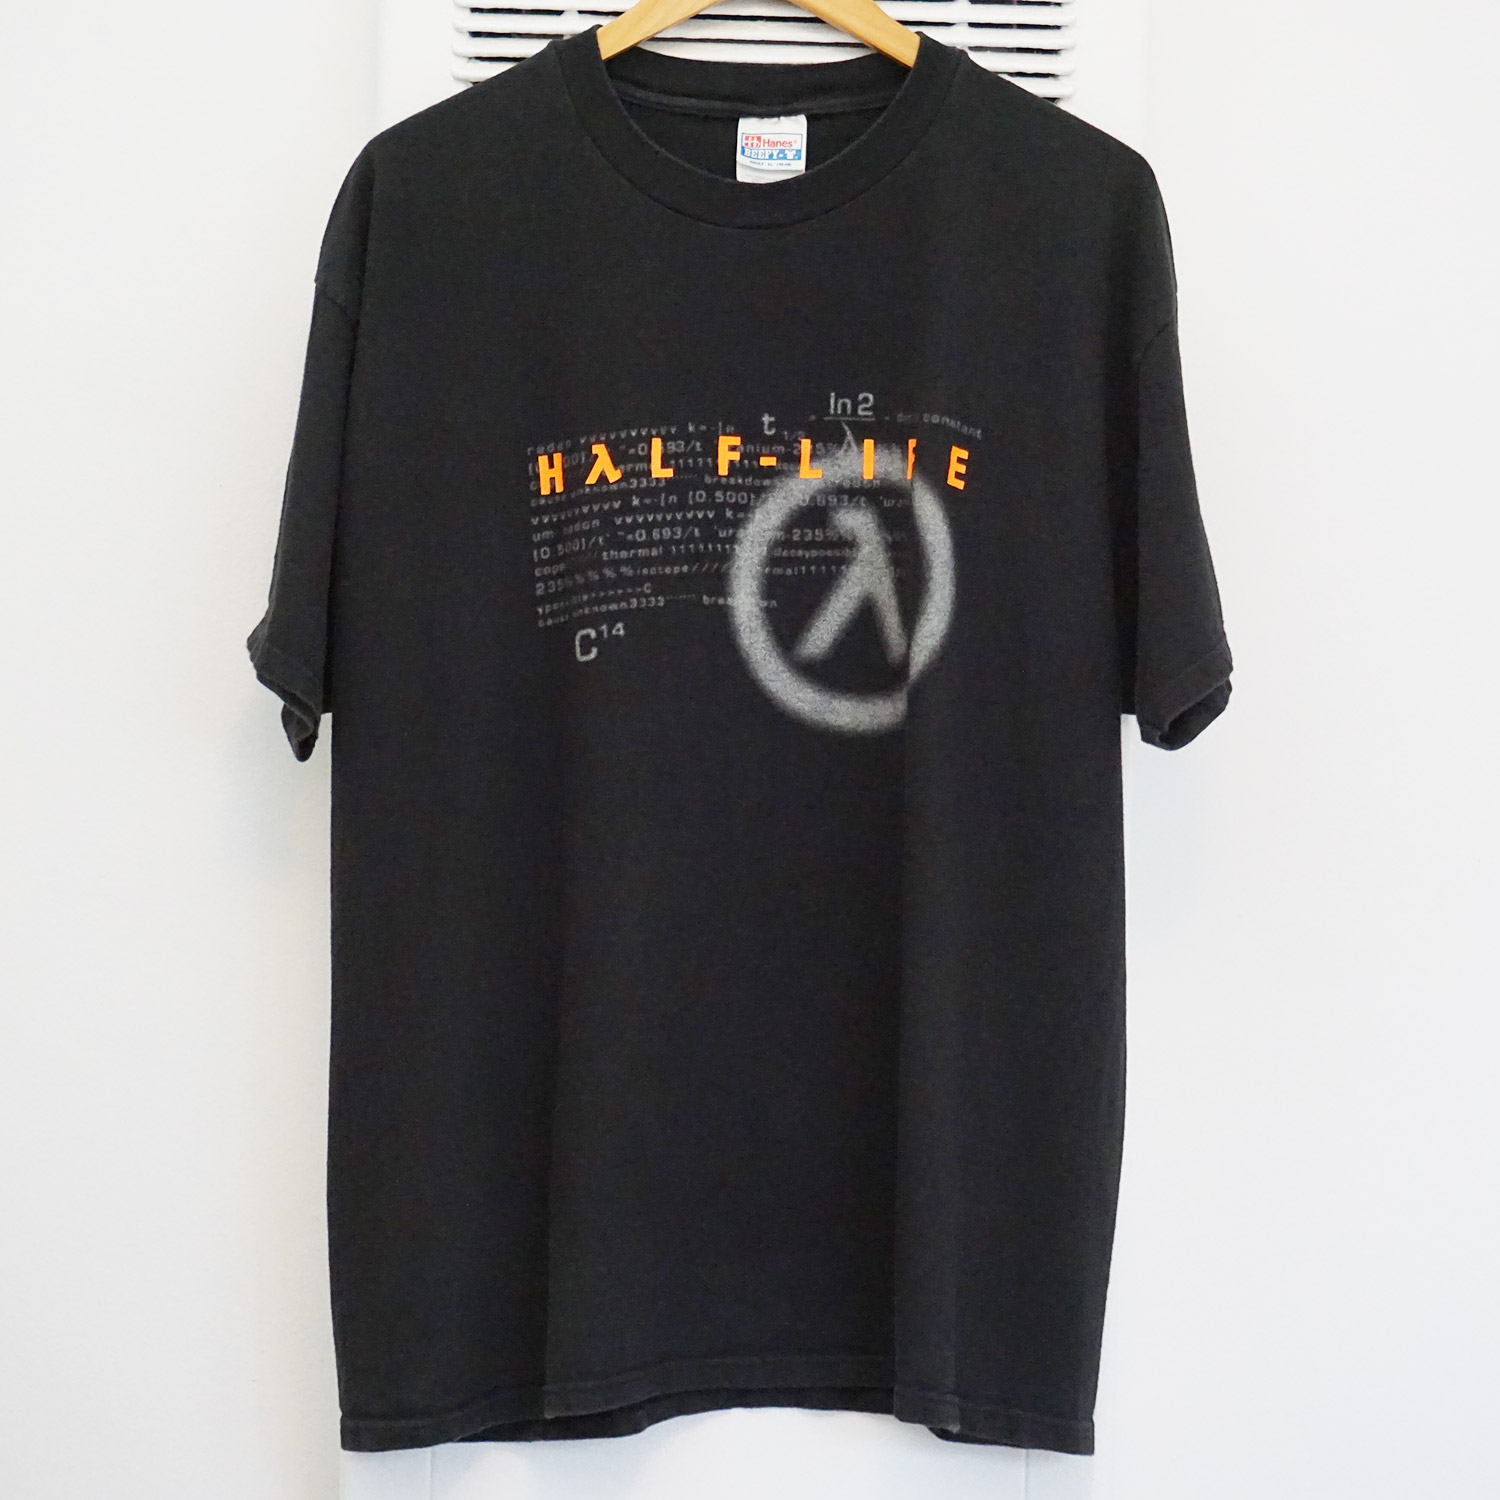 Vintage Half-Life T-shirt, Front